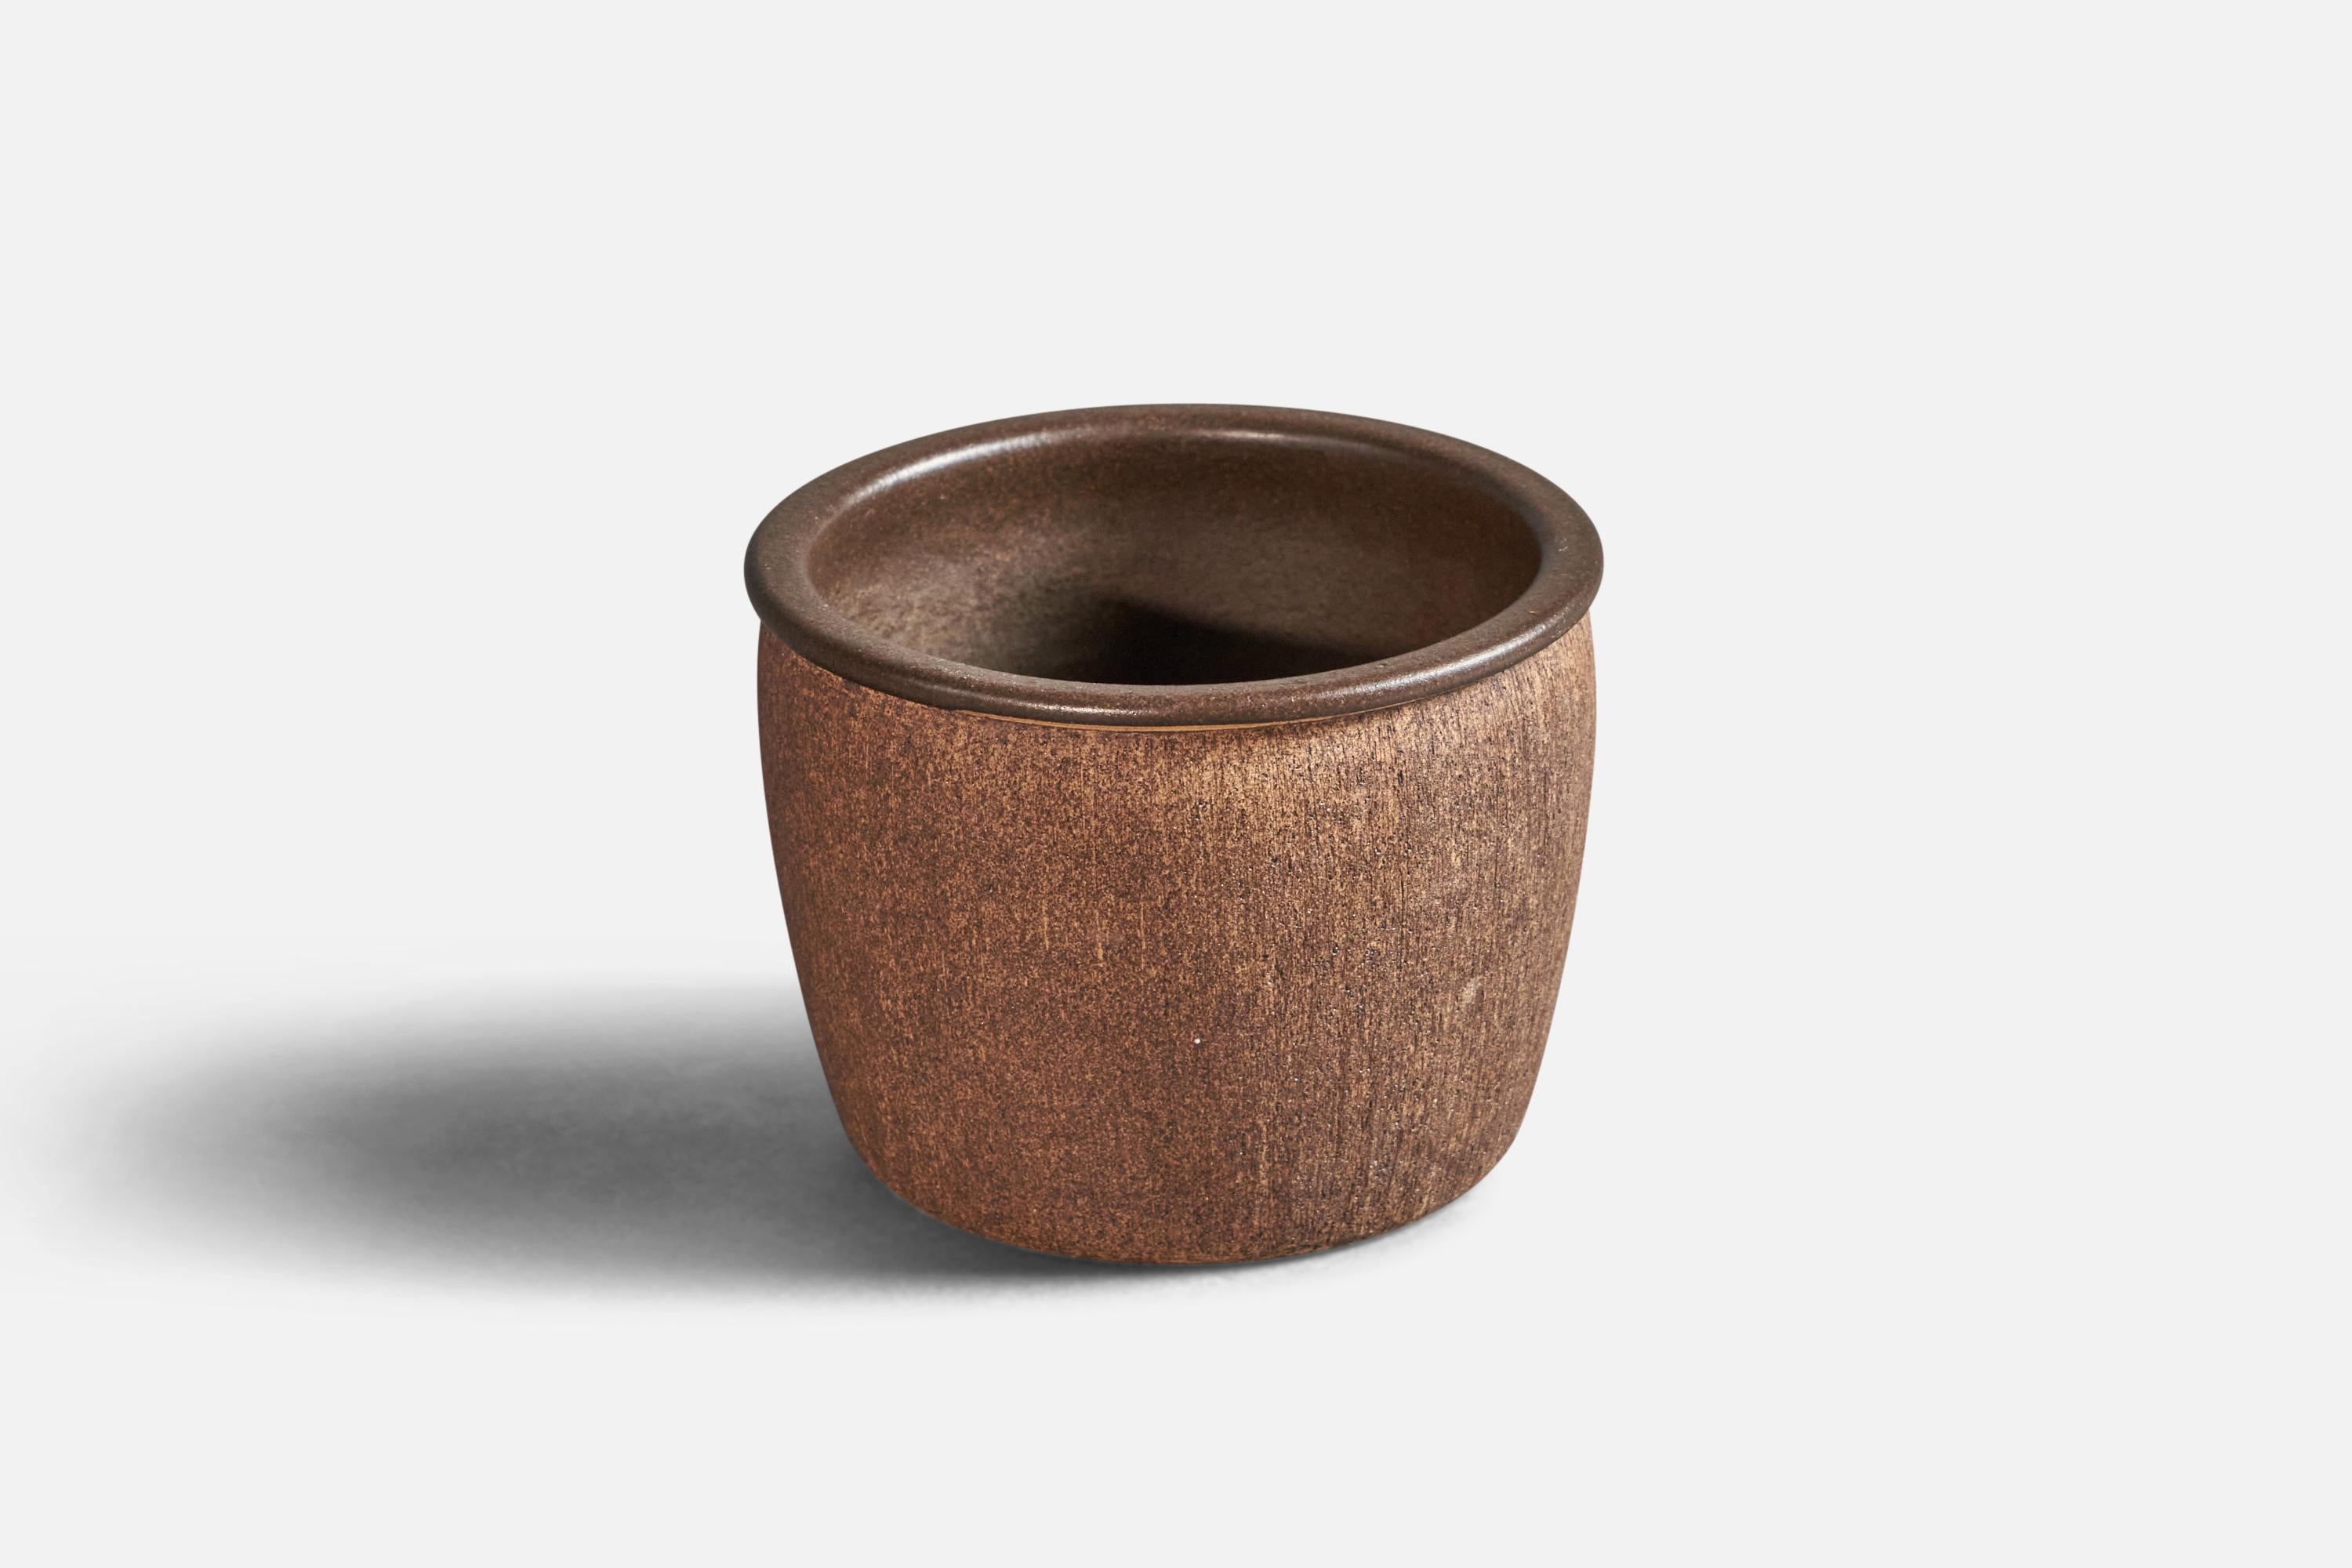 A semi-glazed brown stoneware vase, designed and produced by Nils Allan Johannesson, Barsebäck, Sweden, c. 1960s.